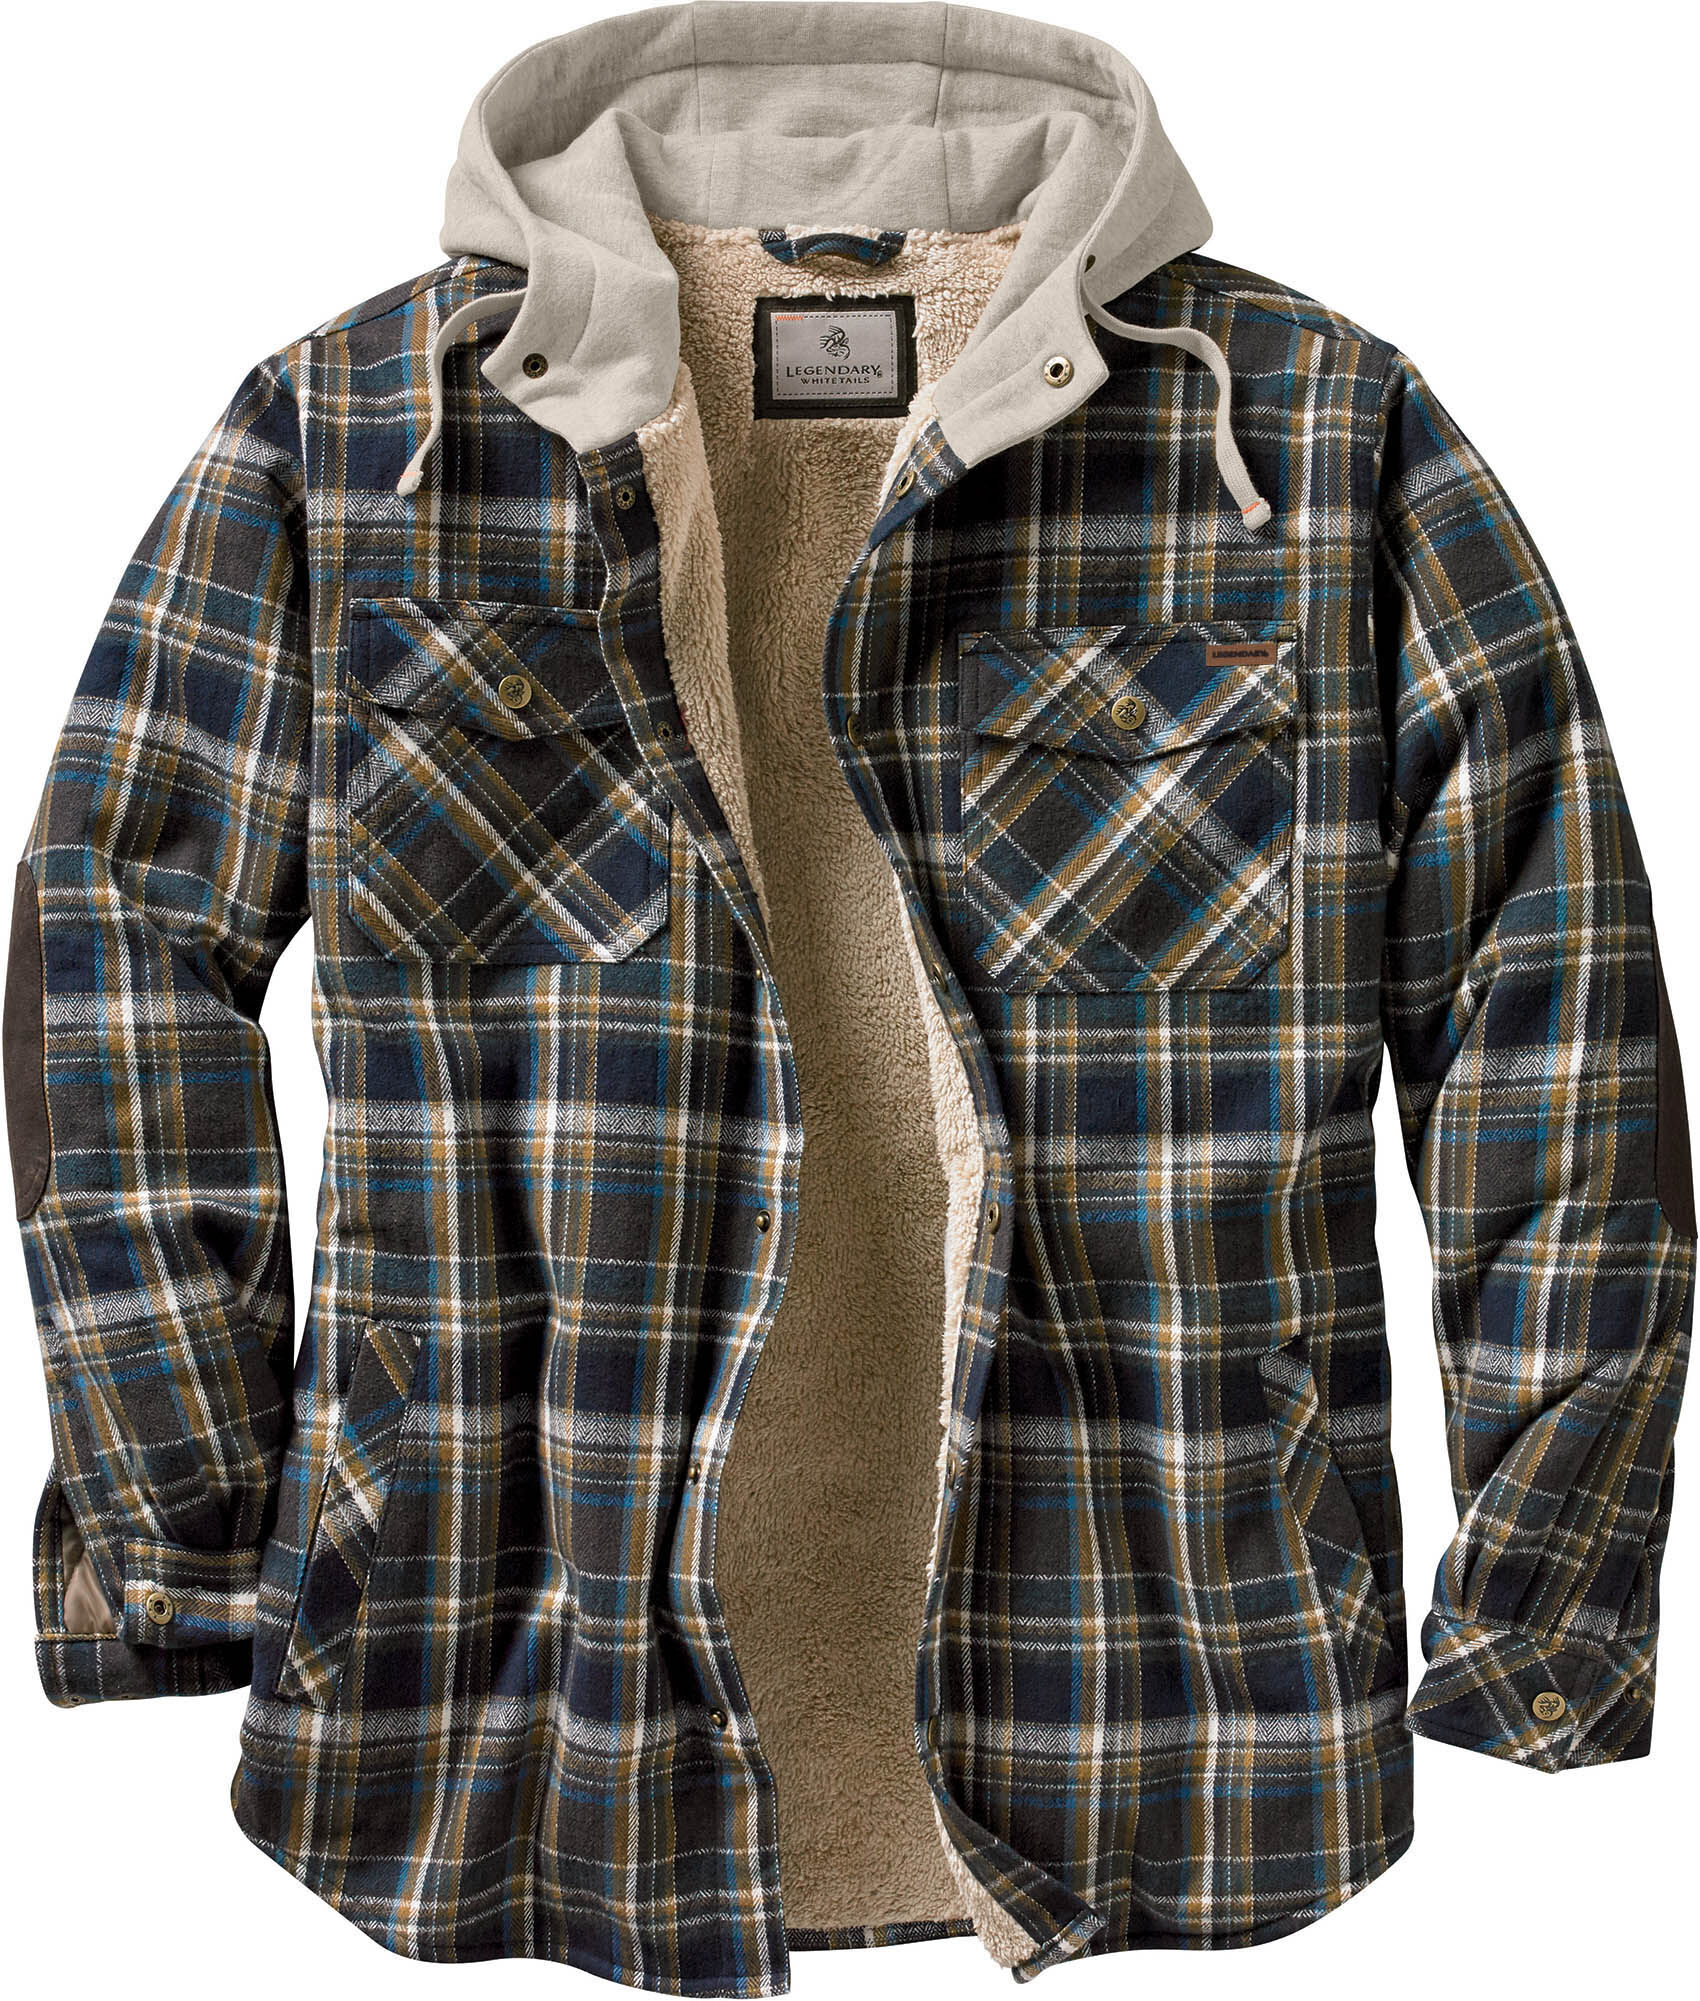 Men's Flannel Jackets \u0026 Shirt Jackets 